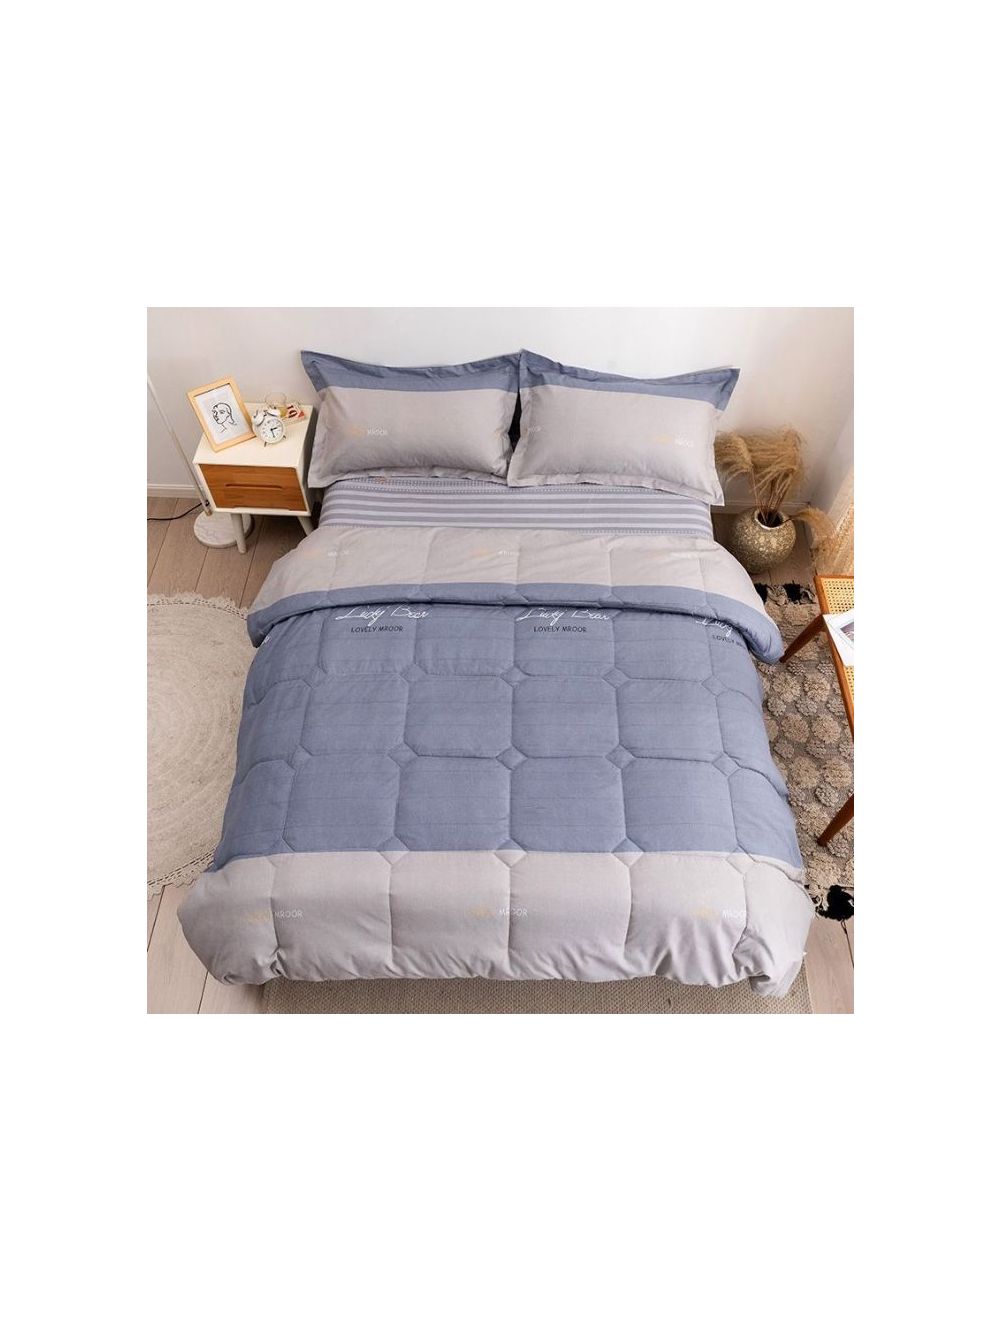 Rishahome 4 Piece King Size Comforter Set Microfiber Multicolour 220x240cm-CASCS0005